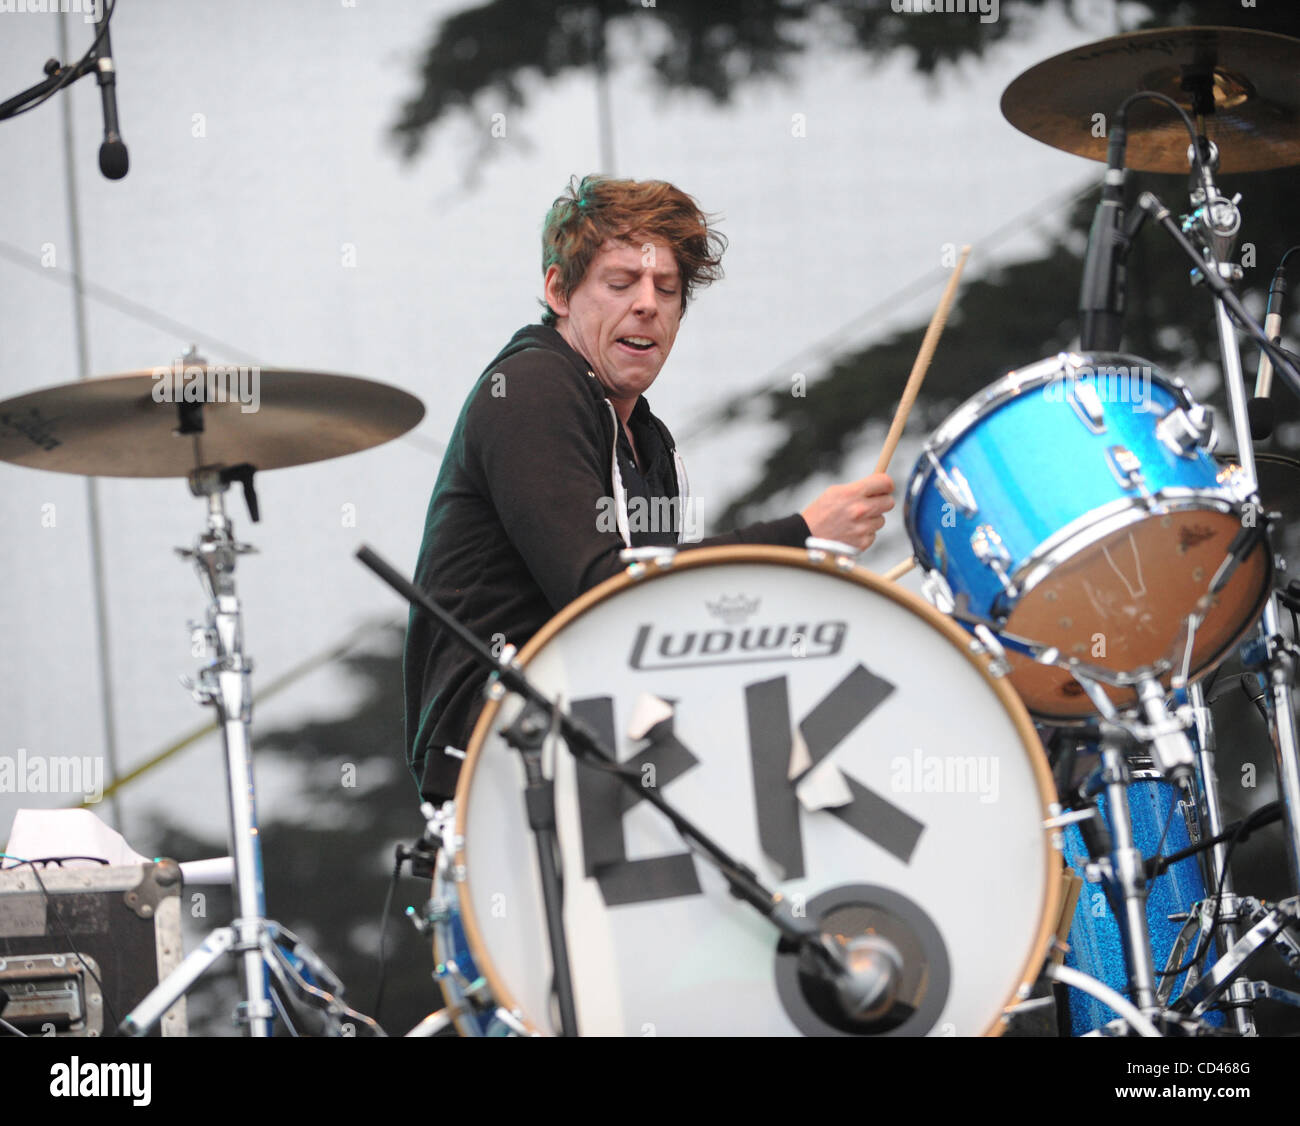 Aug 22, 2008 - San Francisco, California USA - Drummer PATRICK